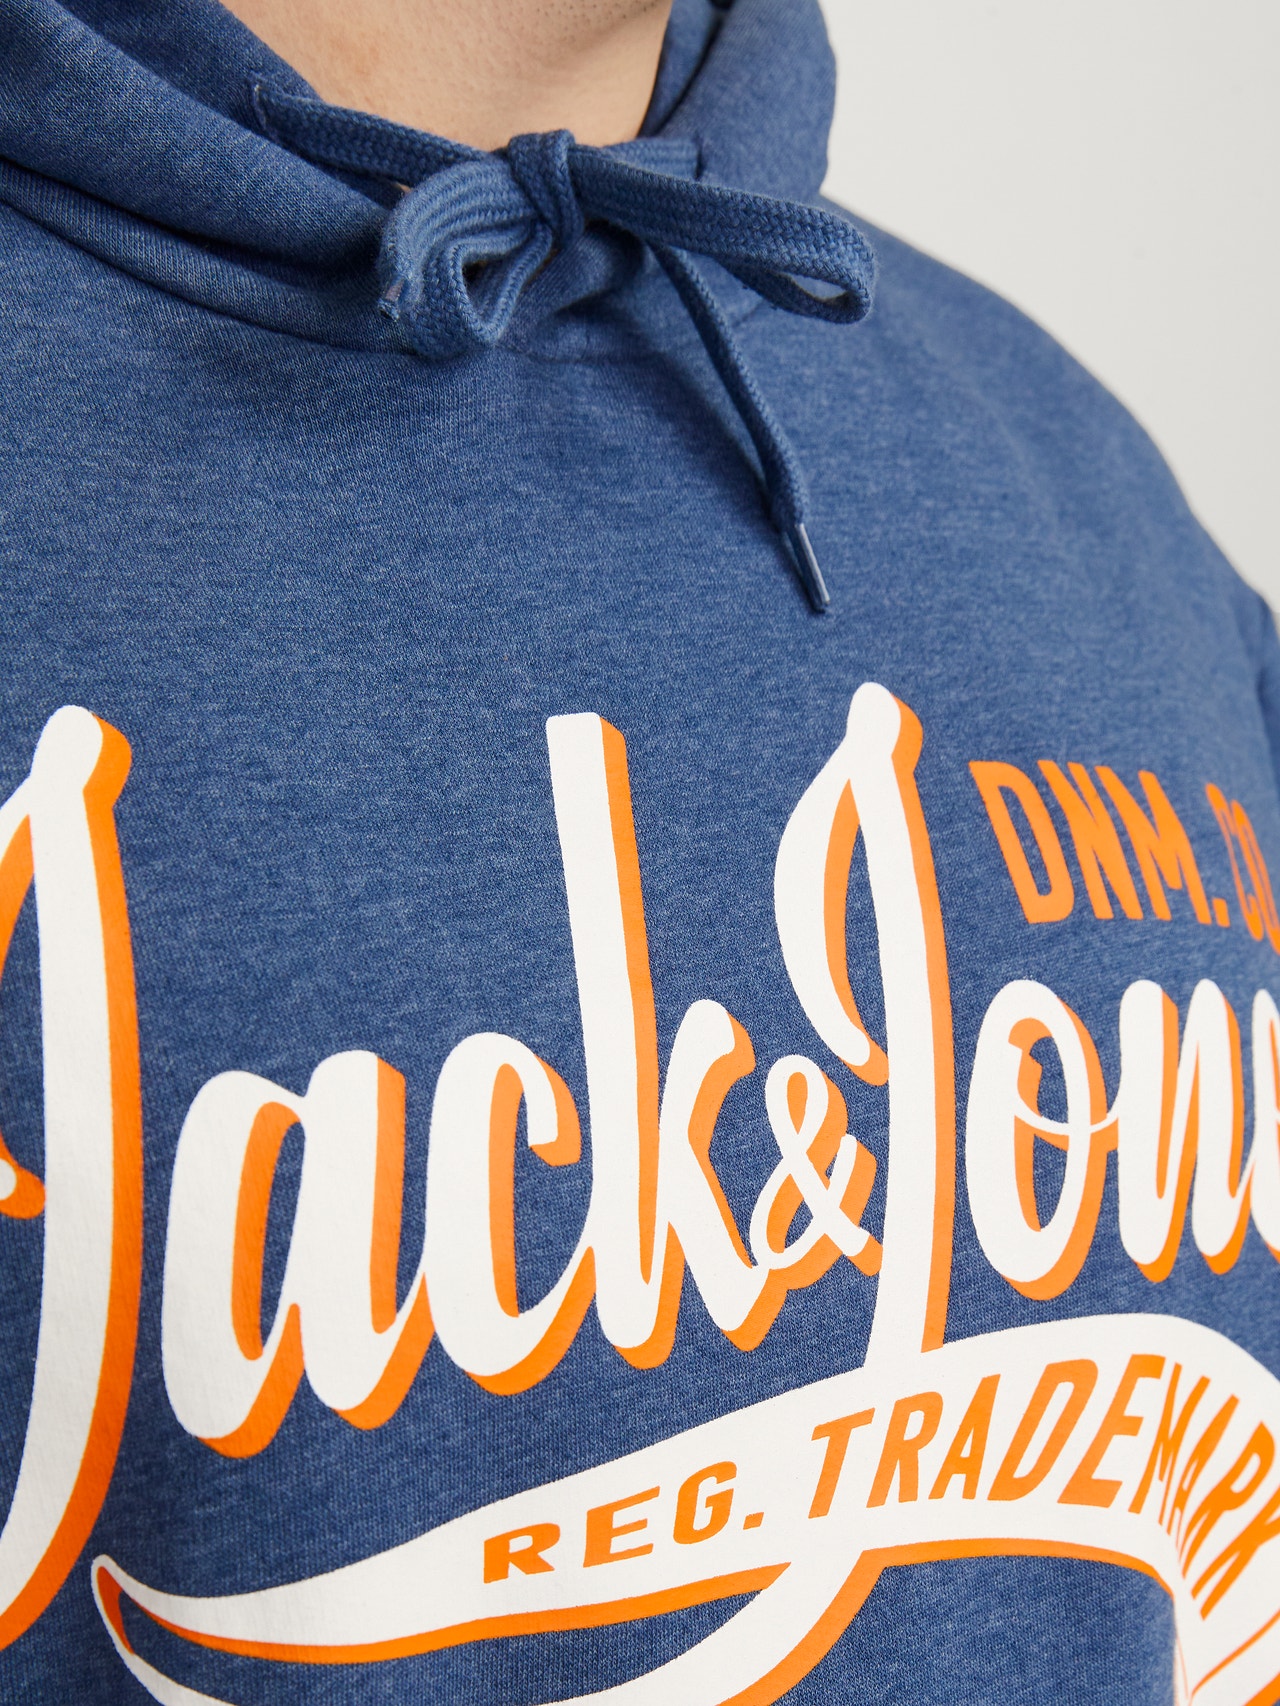 Jack & Jones Plus Size Z logo Bluza z kapturem -Ensign Blue - 12236803